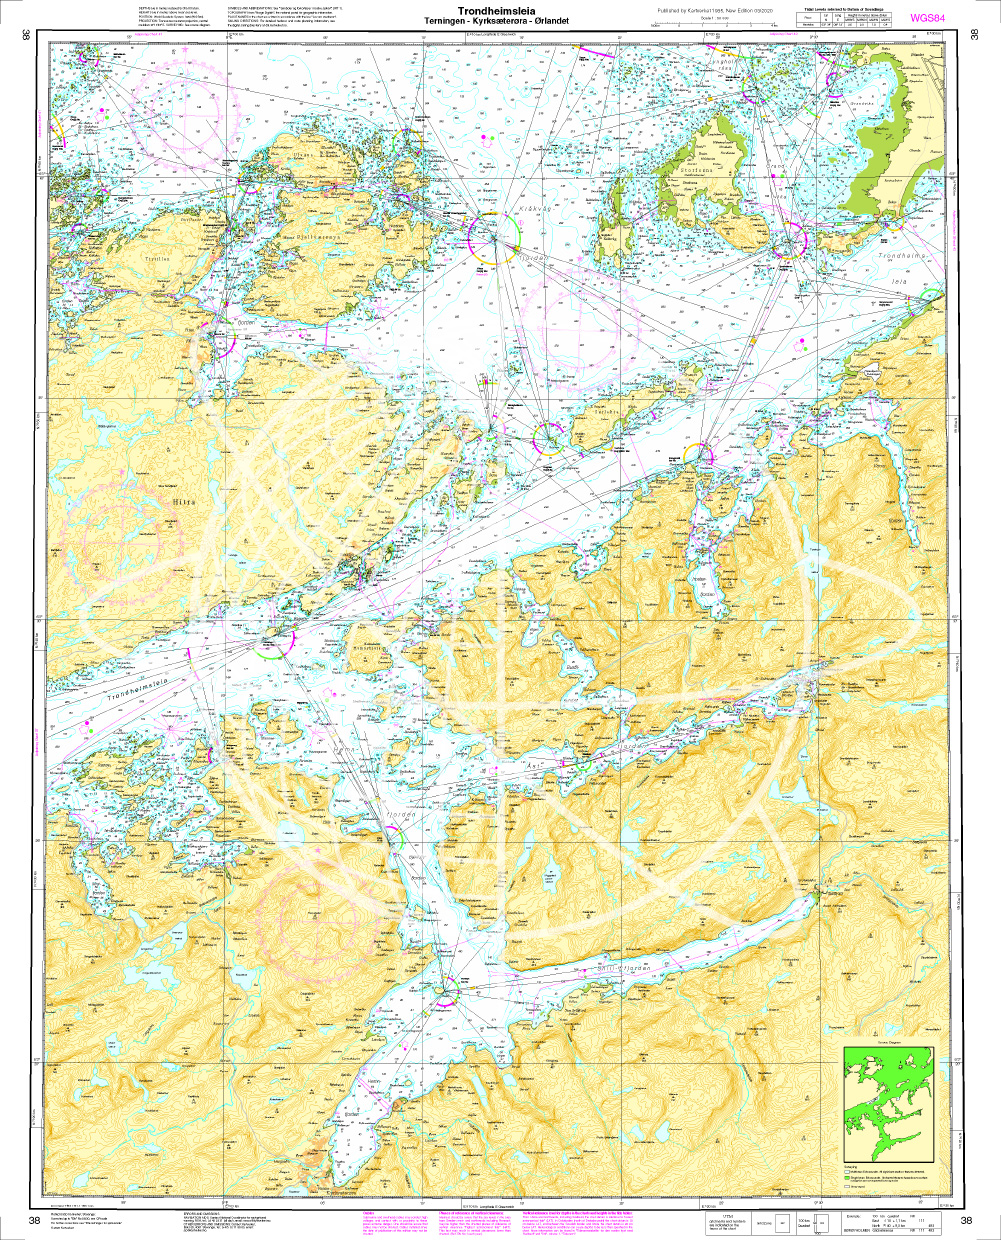 Norwege N 38 Atlantik Trondheimsleia. Terningen - Kyrksæterøra - Ørlandet